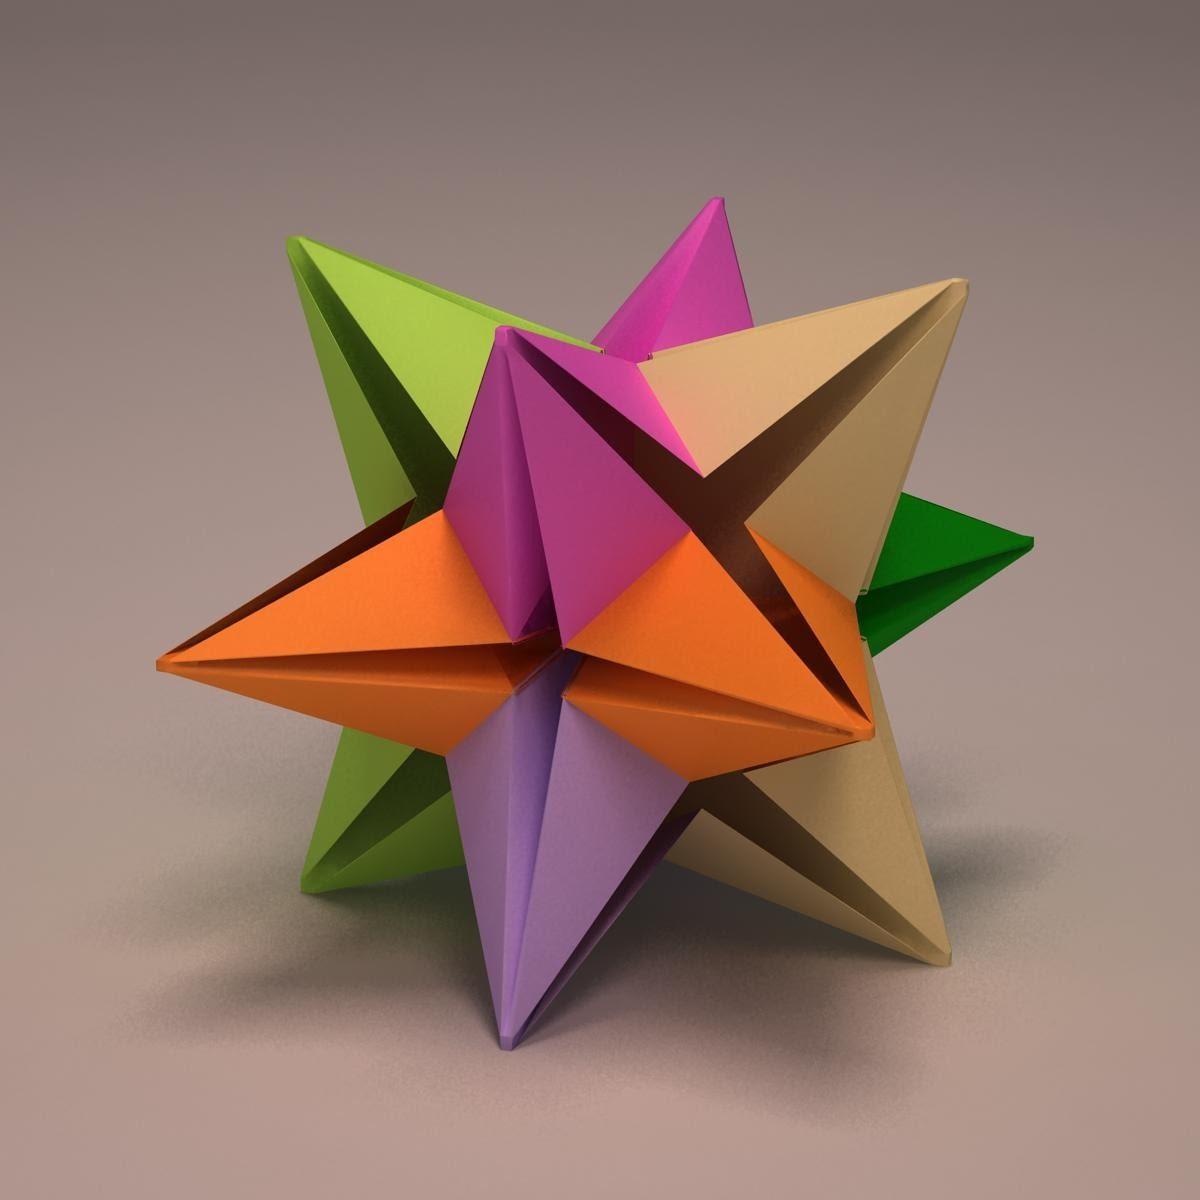 Origami, T:1854528959. wallpaper on the desktop